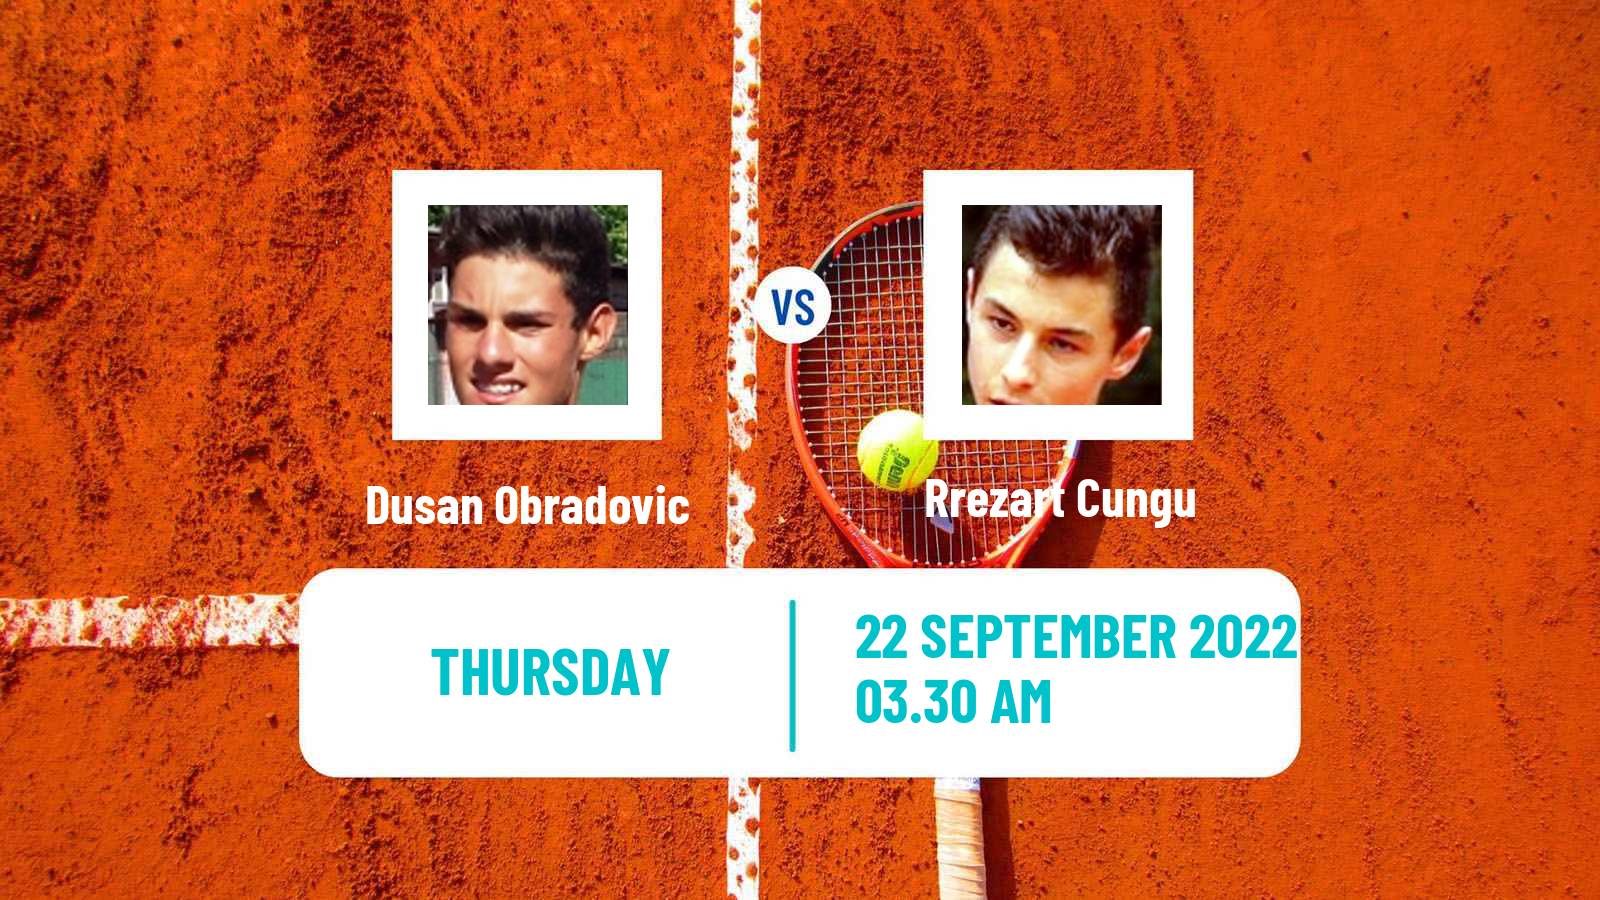 Tennis ITF Tournaments Dusan Obradovic - Rrezart Cungu